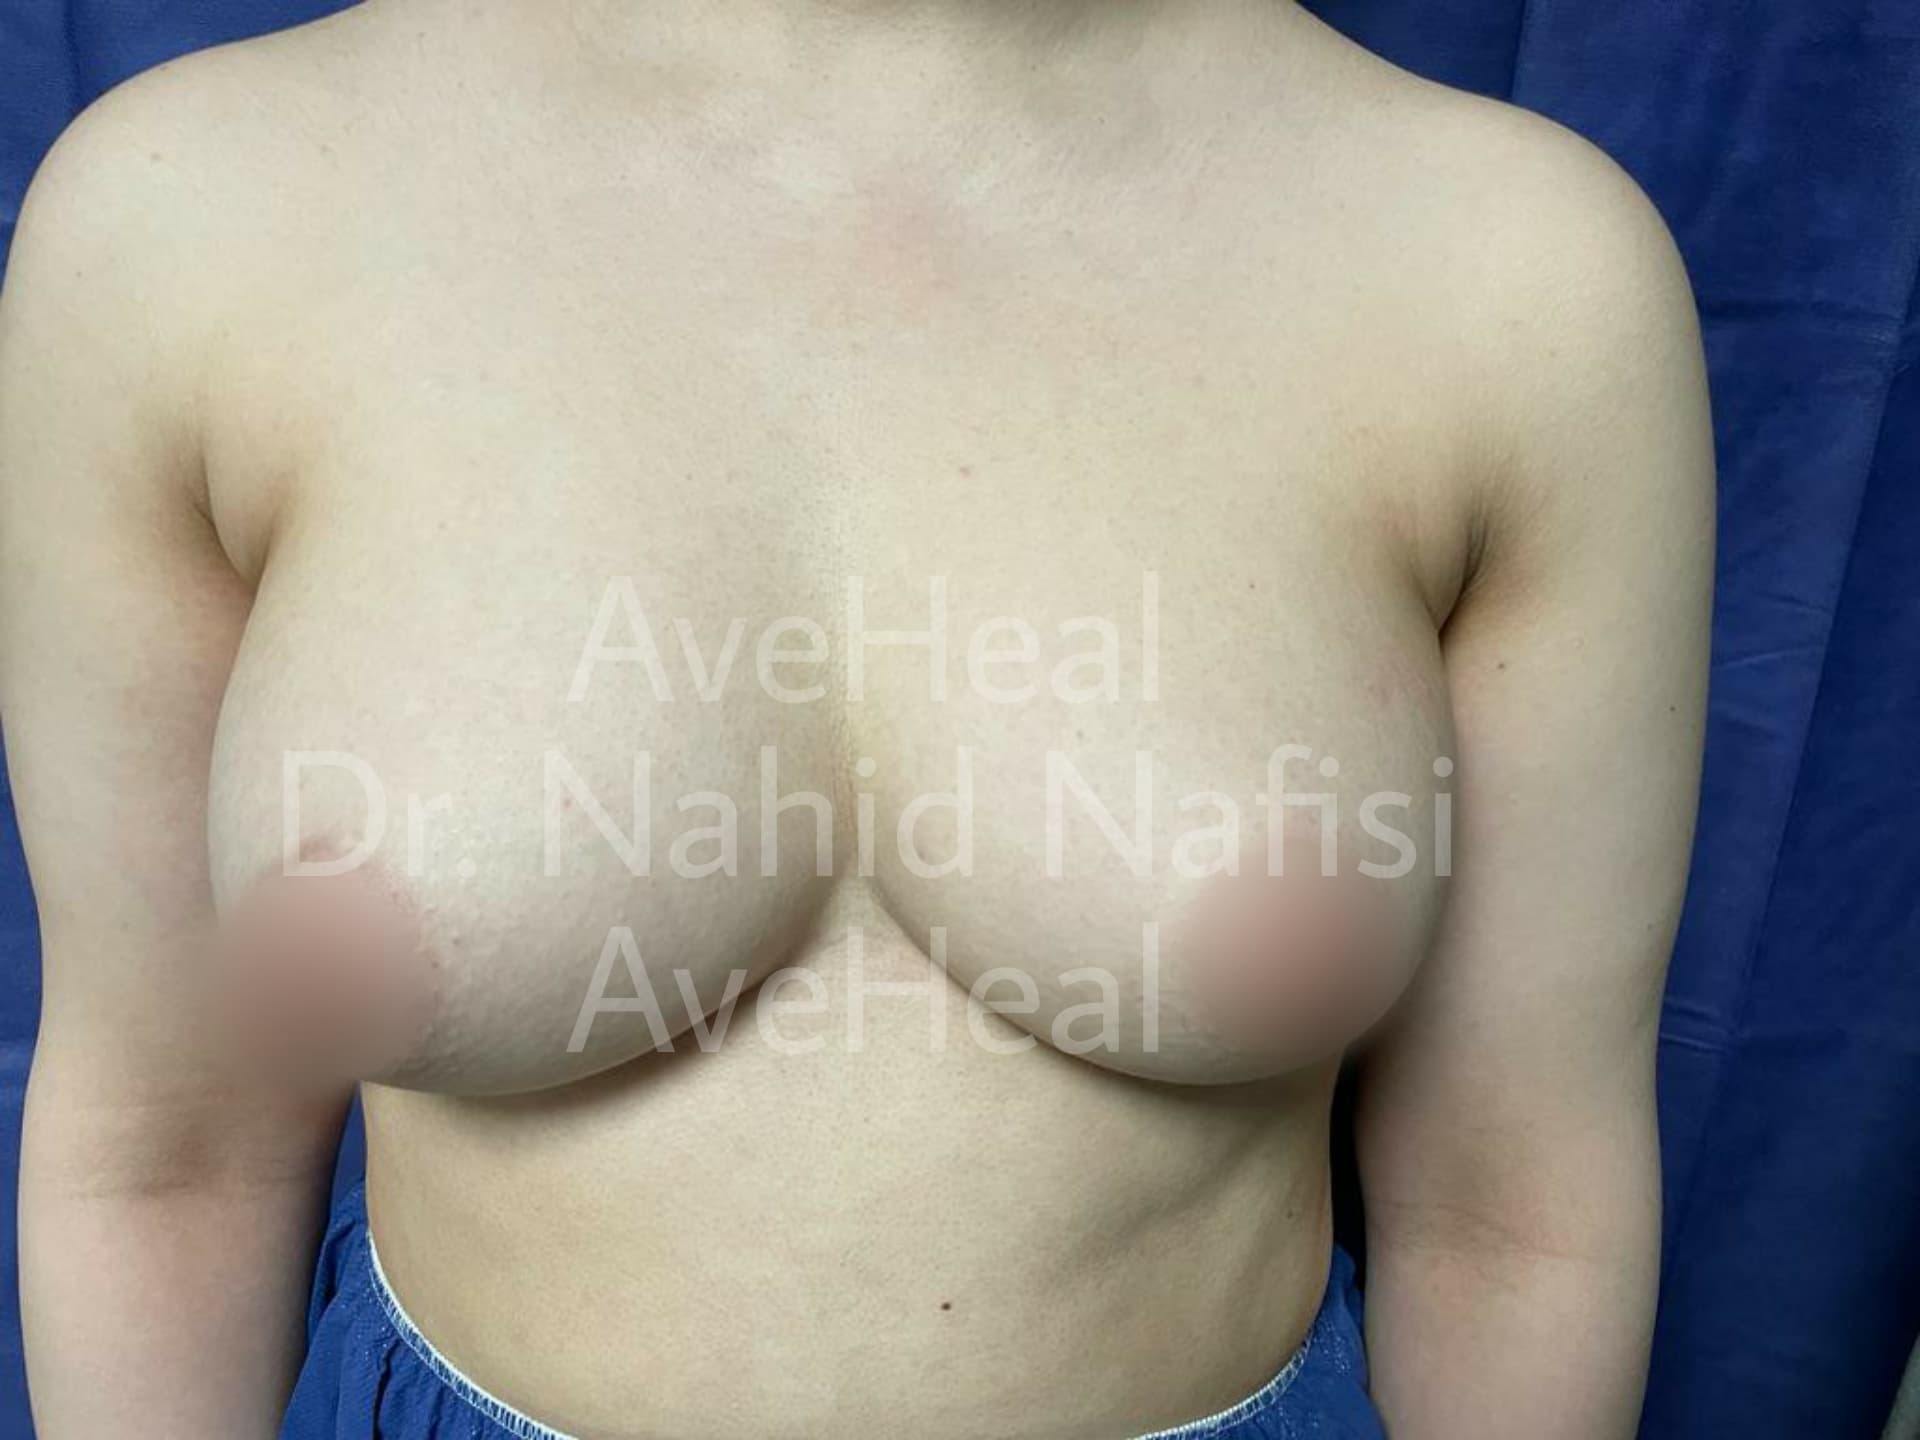 before-breast-augmentation-dr-nahid-nafisi